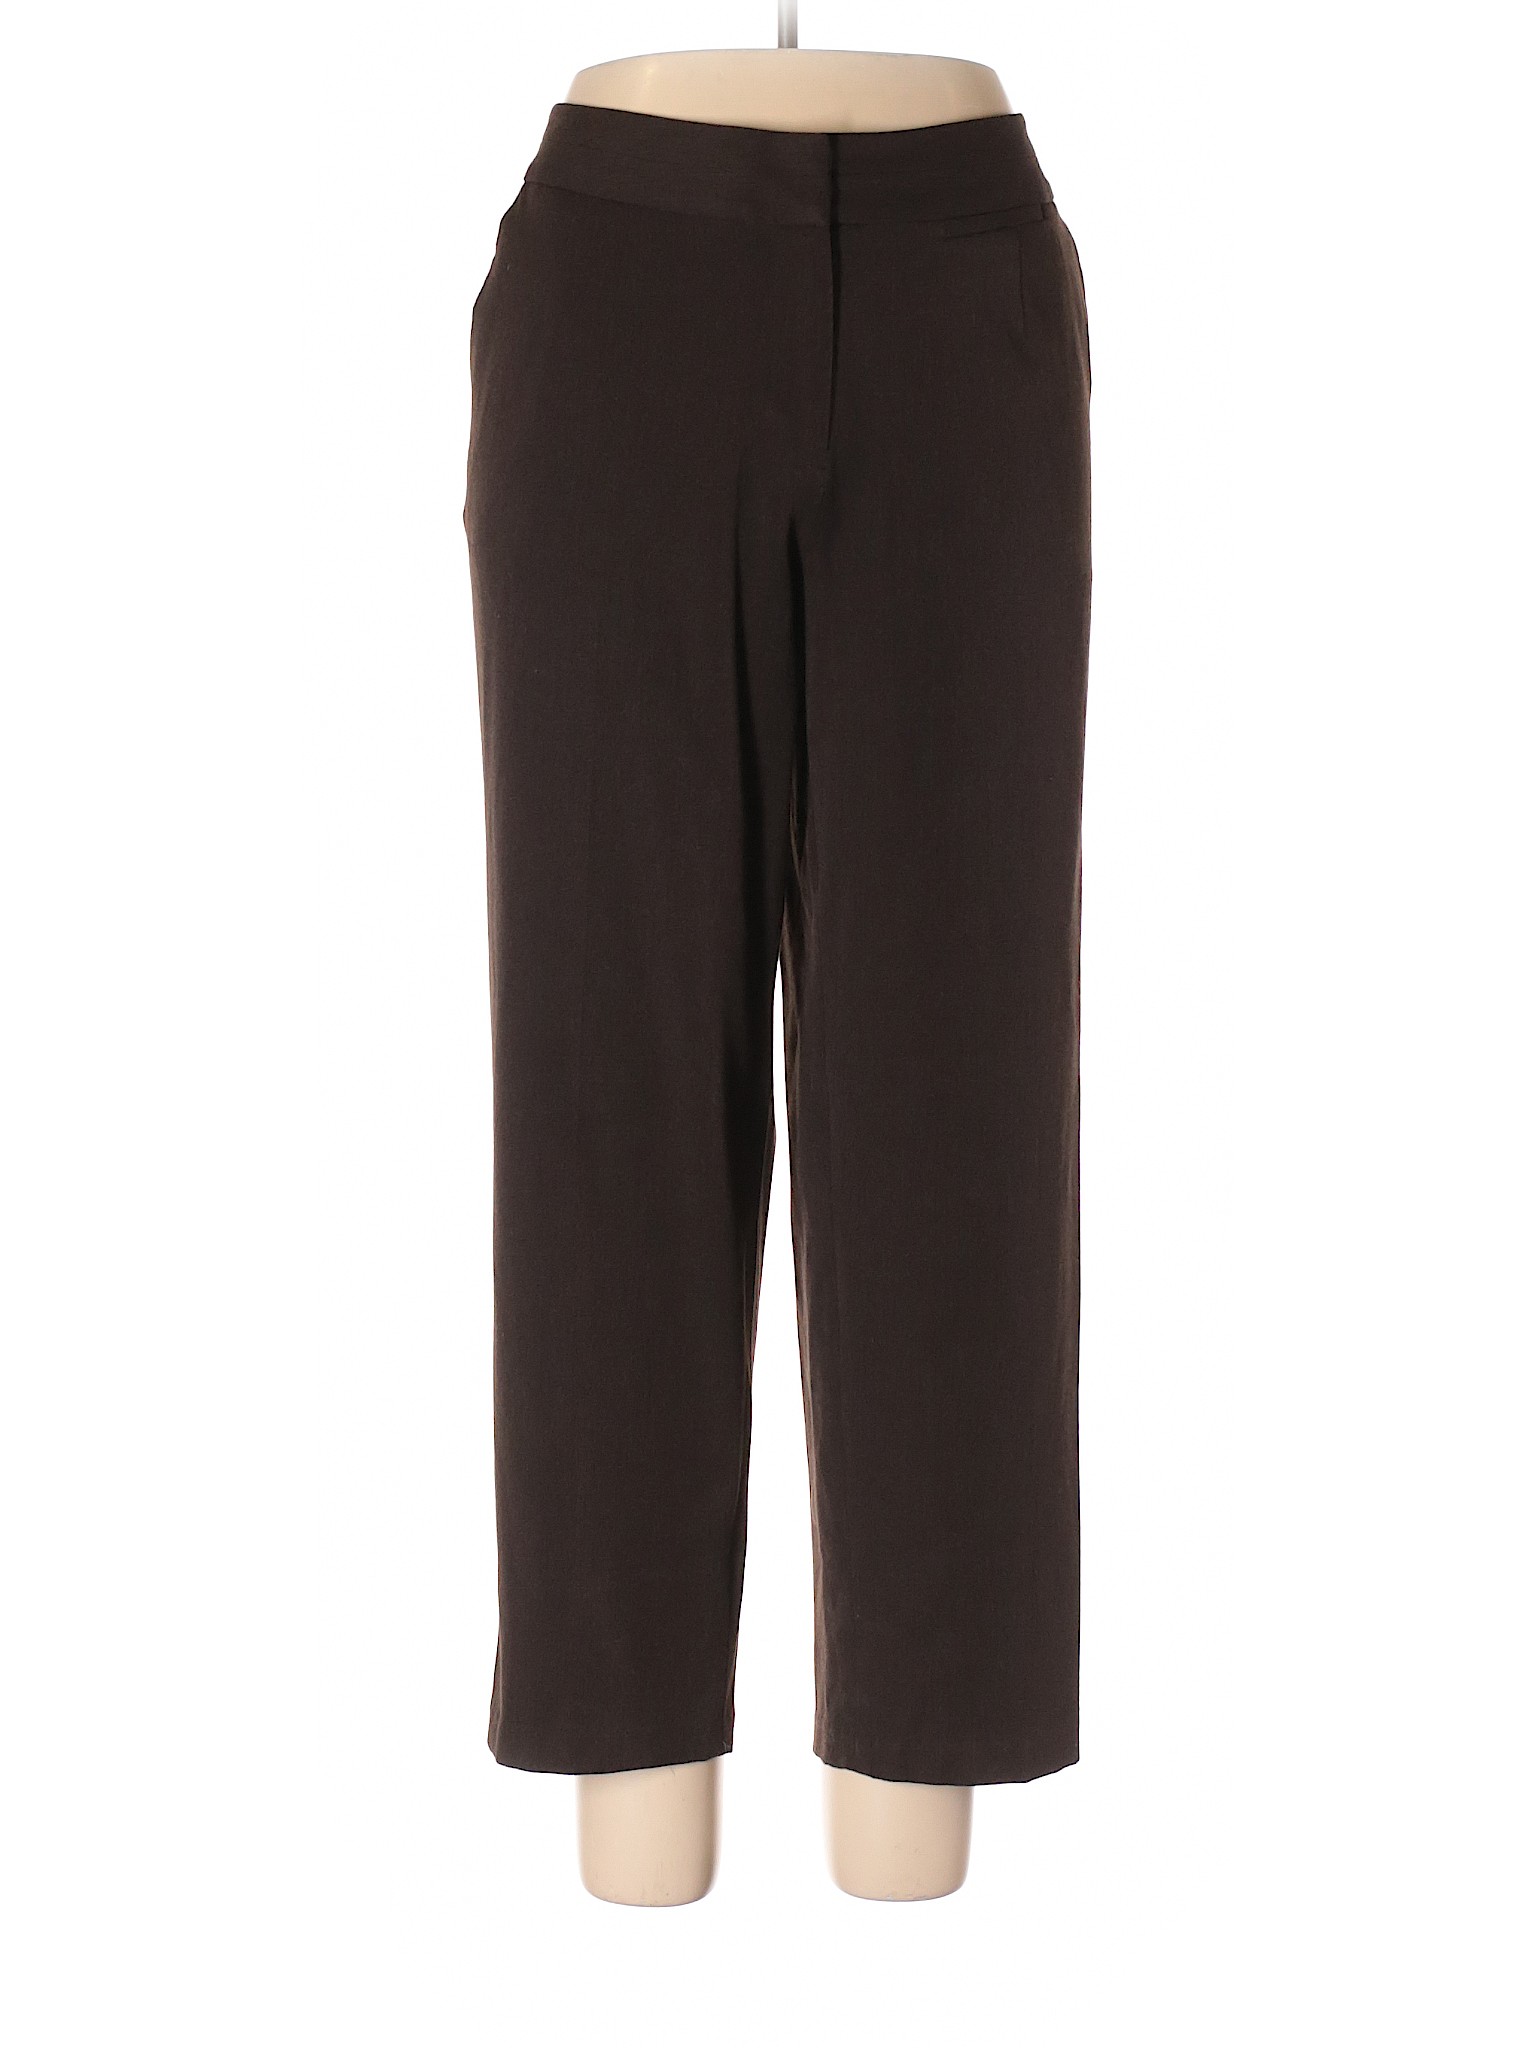 Talbots Solid Brown Dress Pants Size 16 - 82% off | thredUP